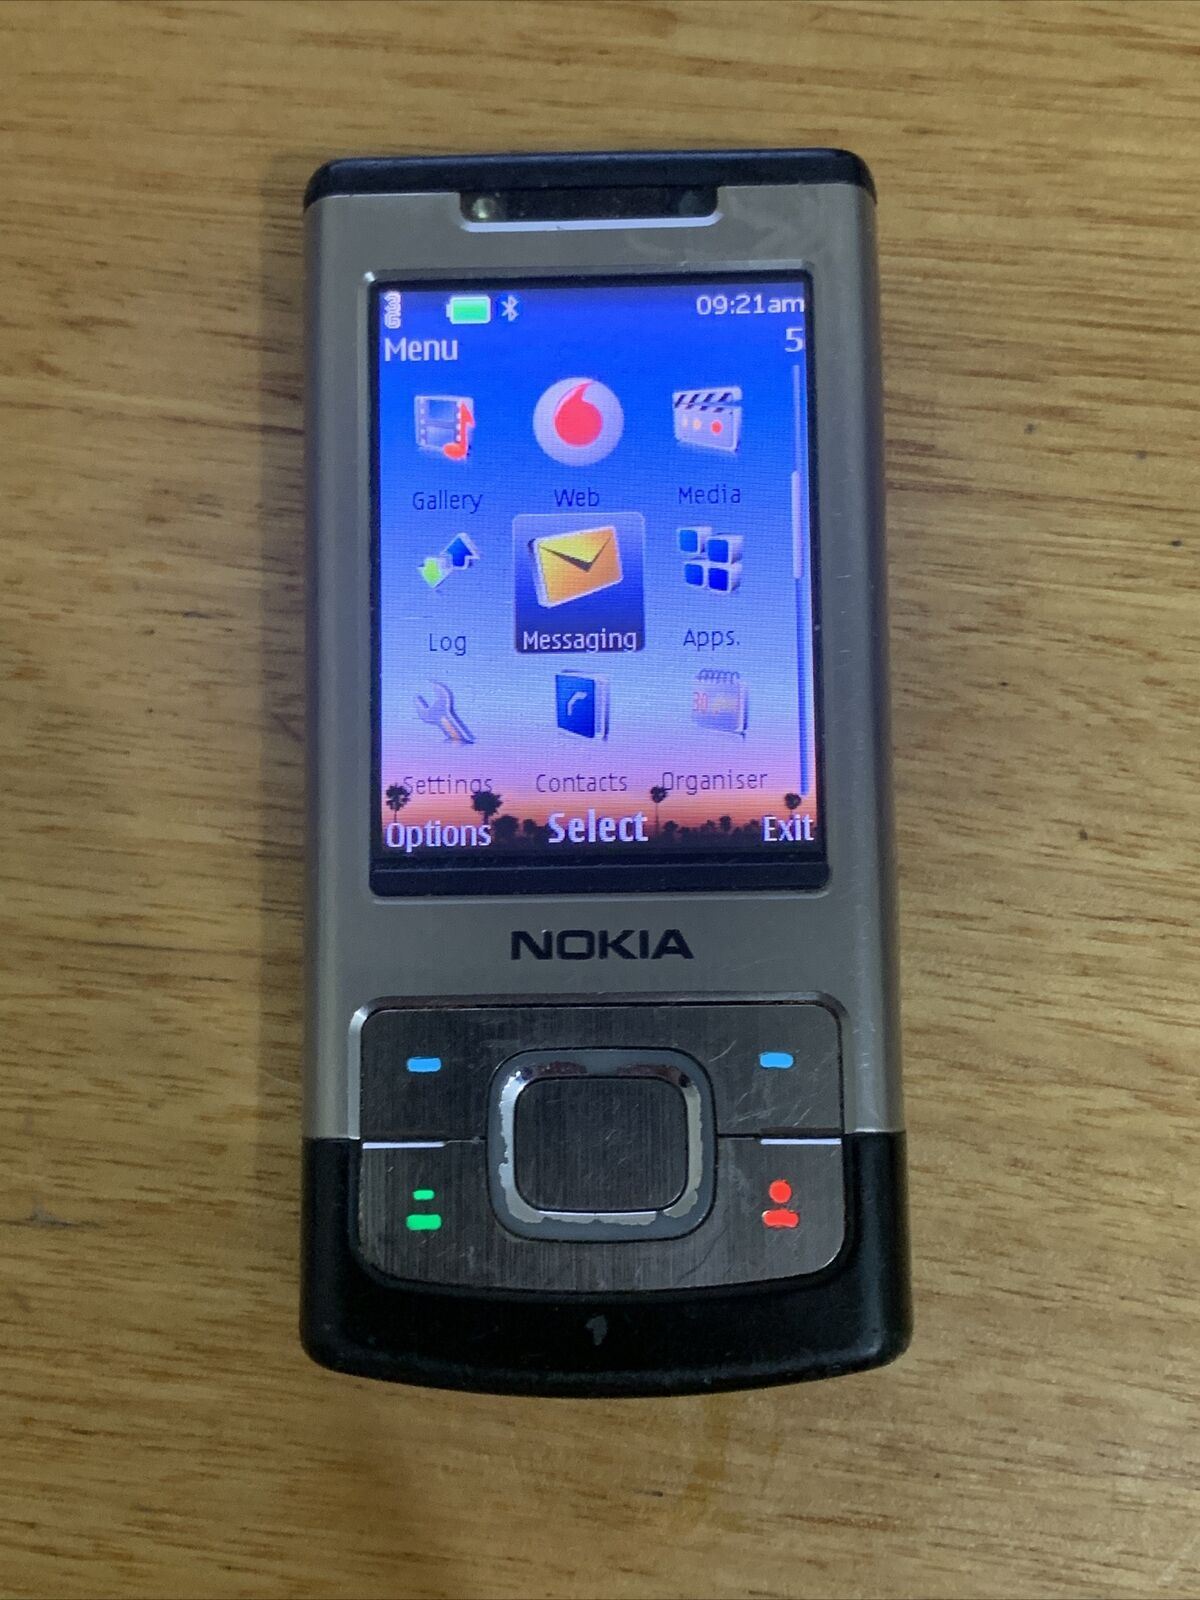 Nokia  Slide 6500 - Black and Silver Smartphone